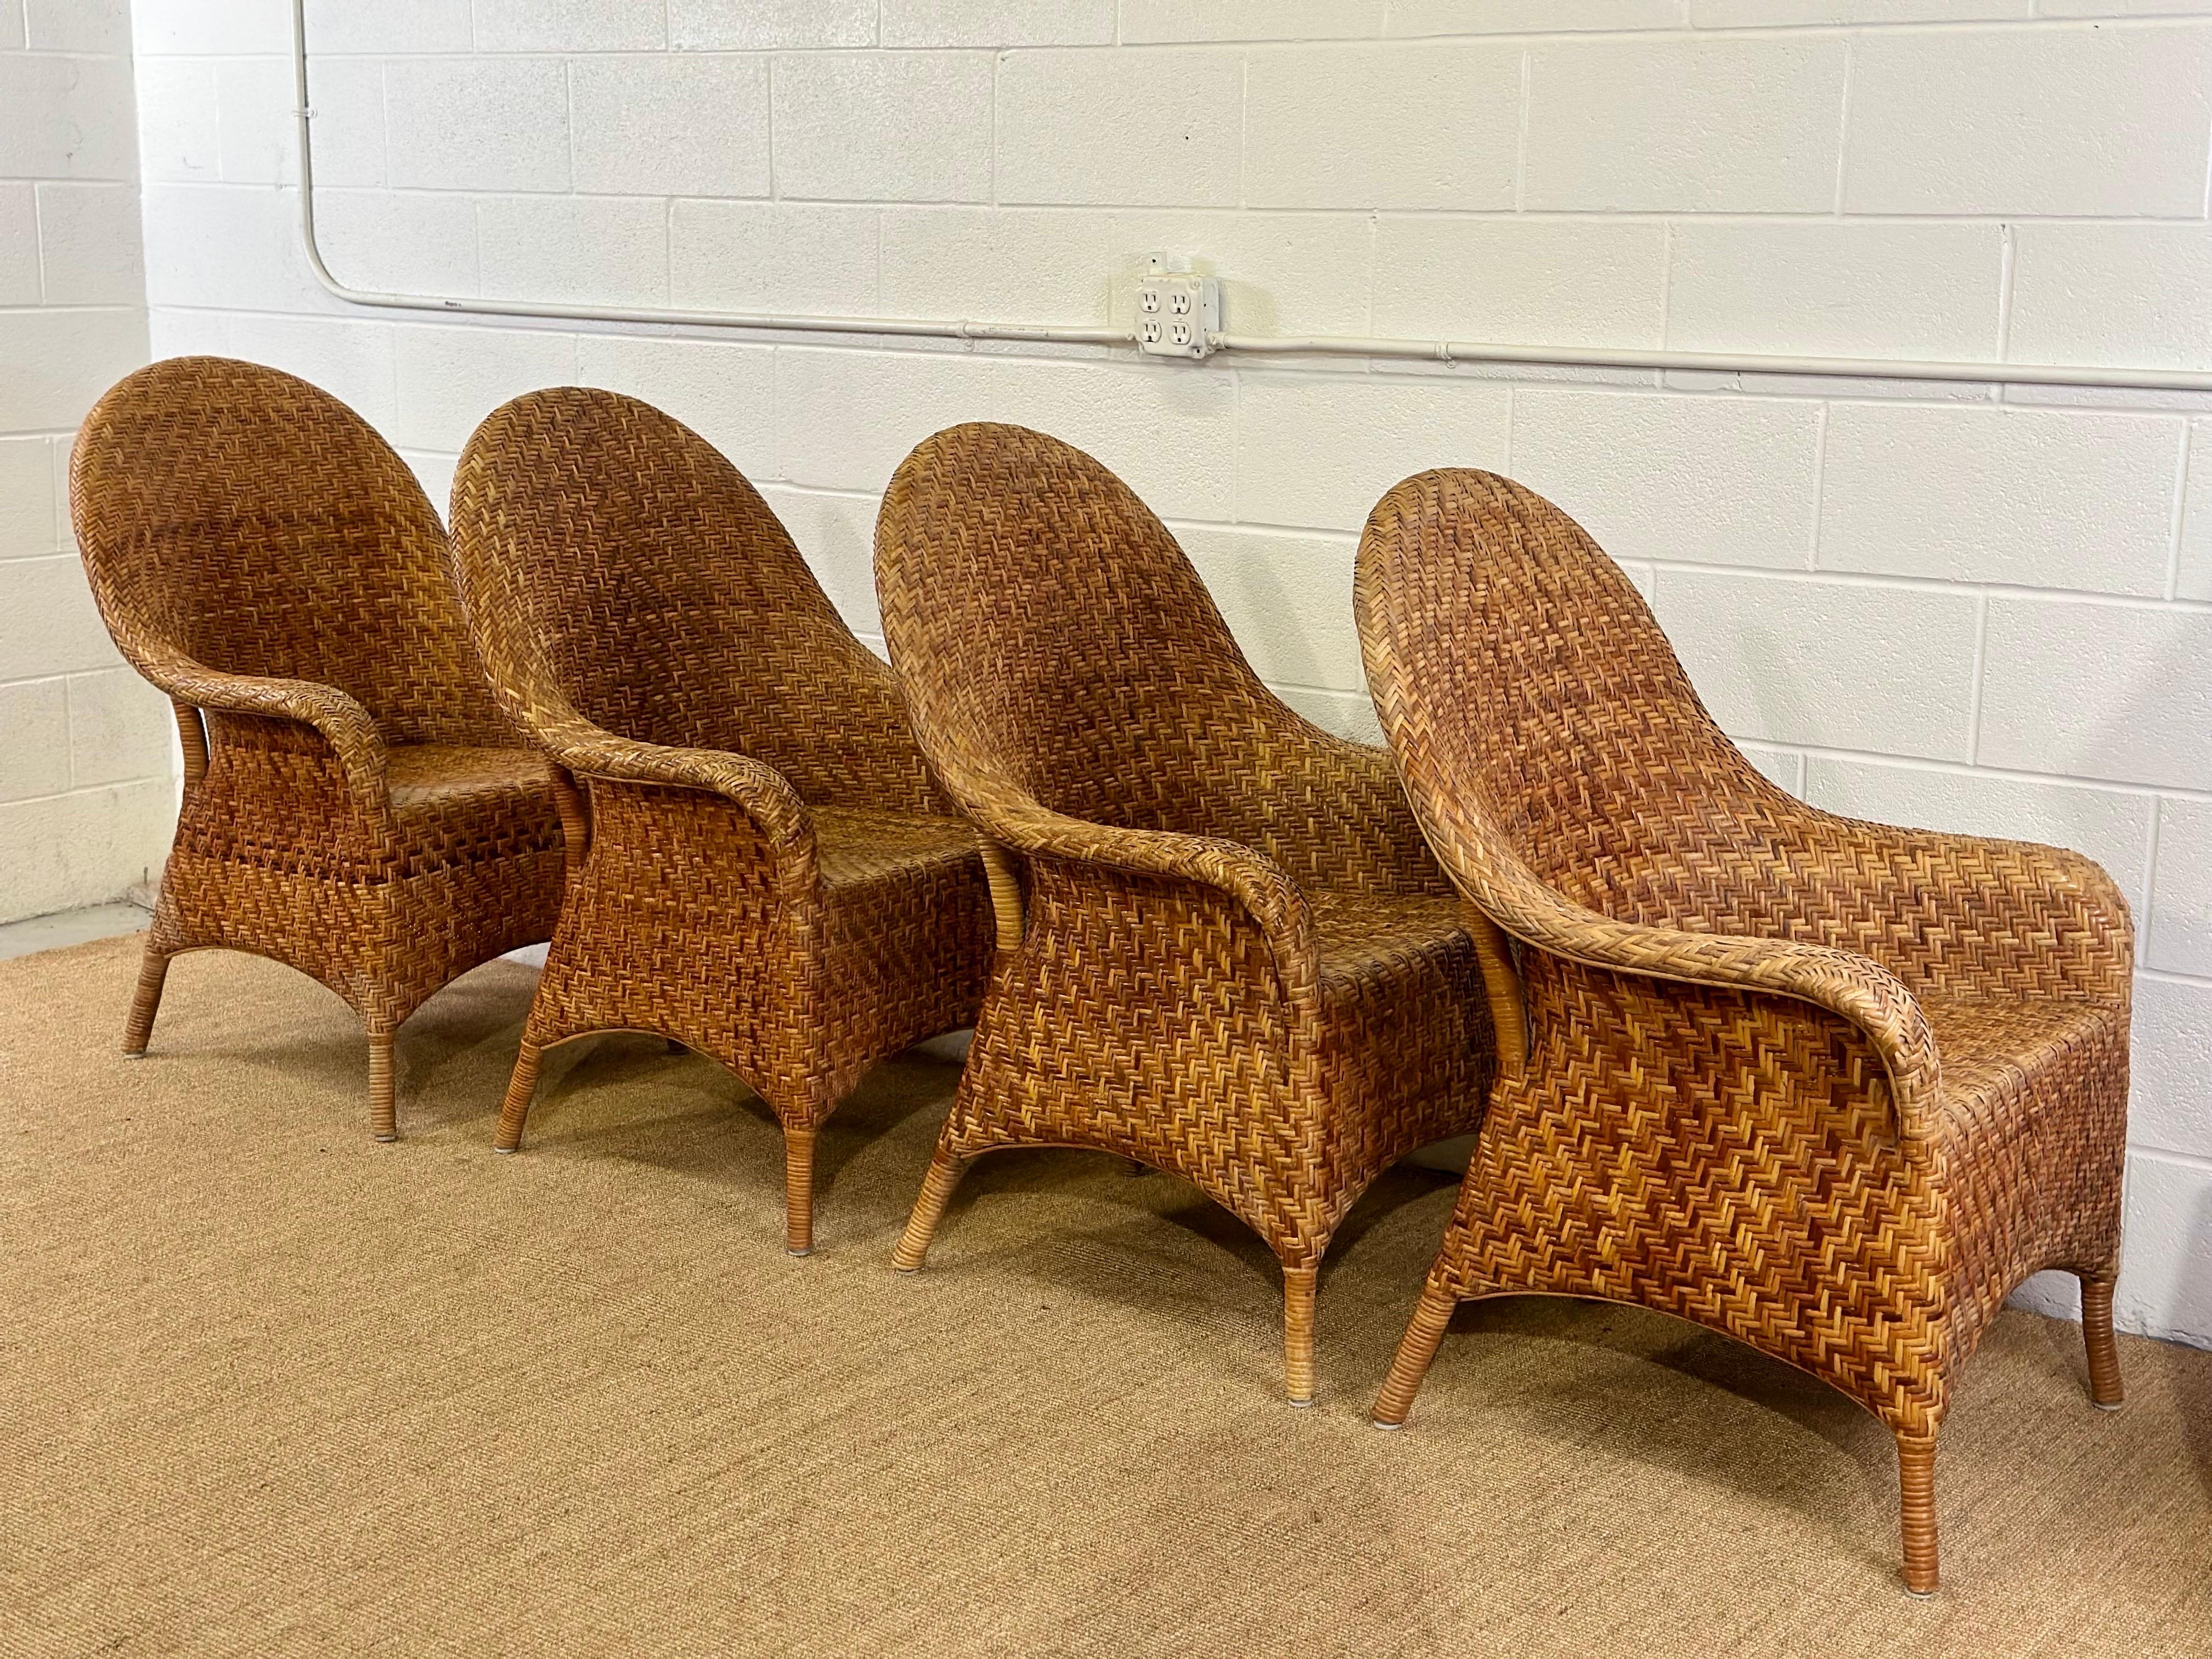 Bamboo Vintage Organic Modern Woven Herringbone Wicker Rattan Dining Chairs - Set of 4 